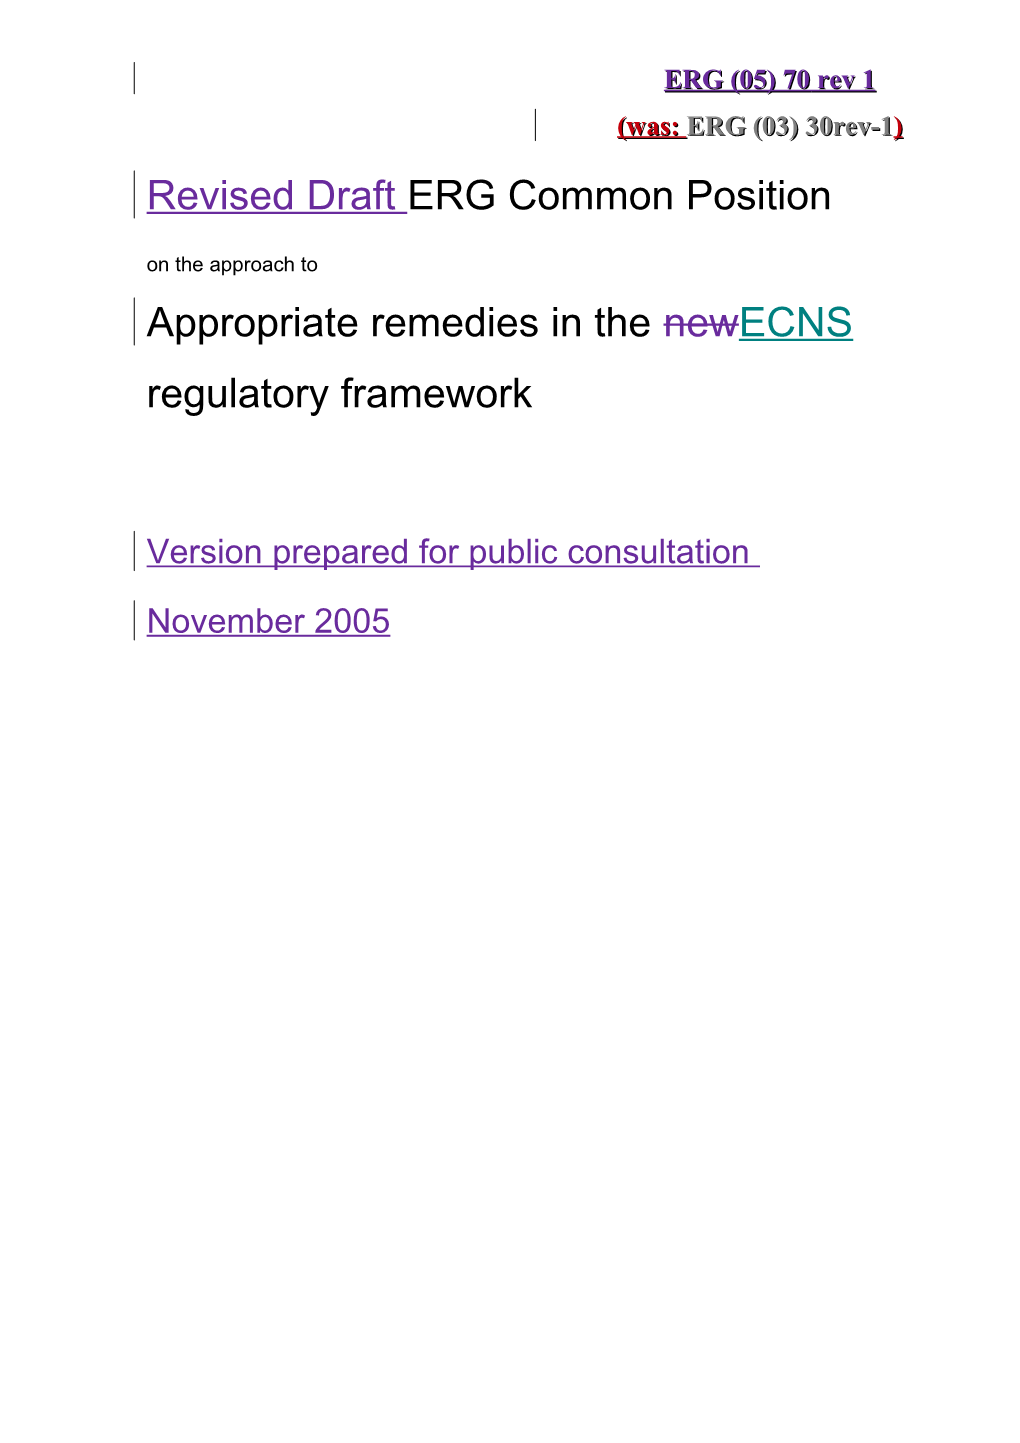 Appropriate Remedies in the Newecnsregulatory Framework